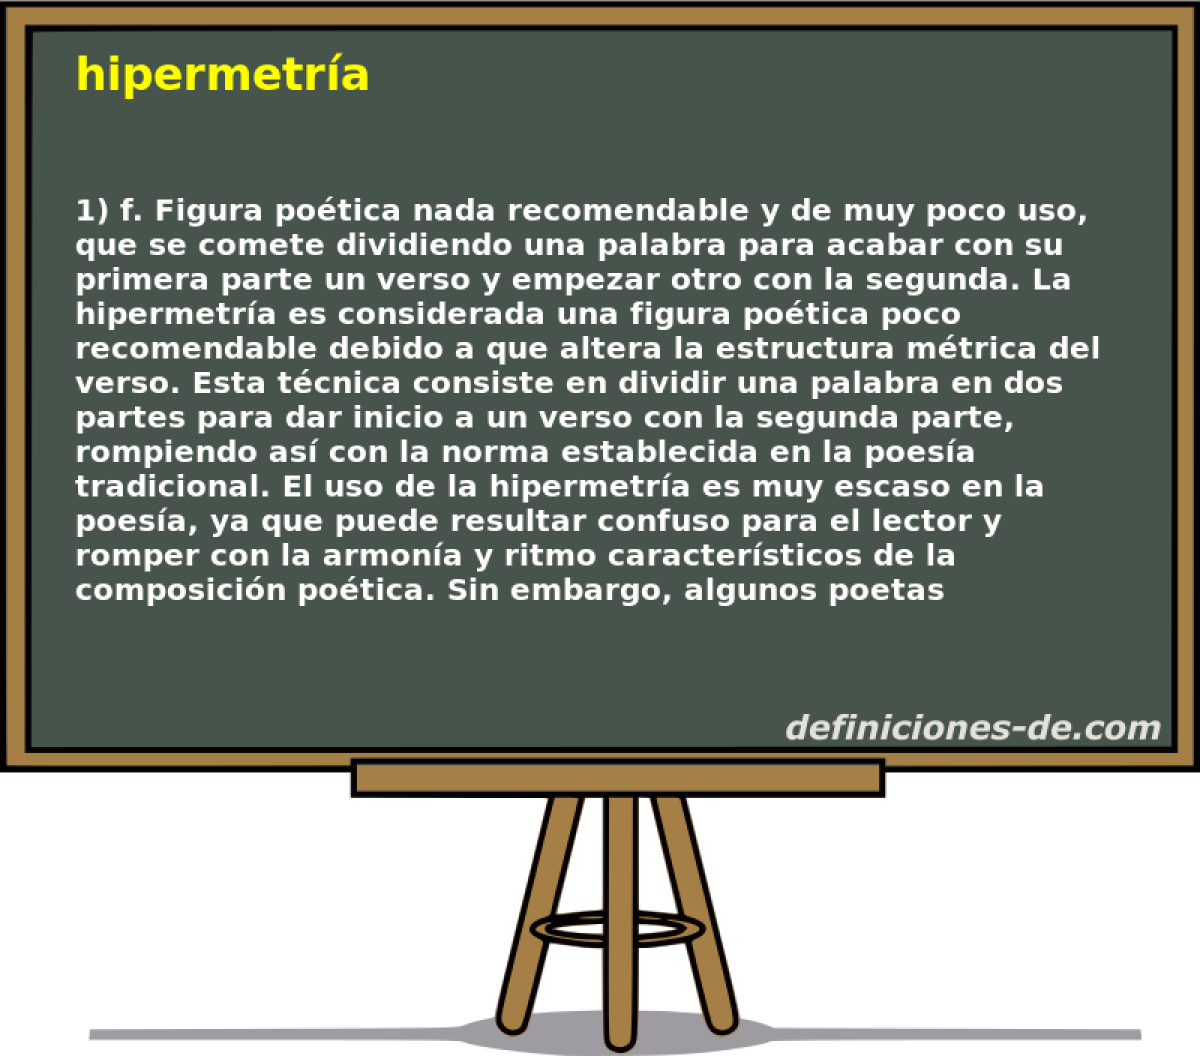 hipermetra 